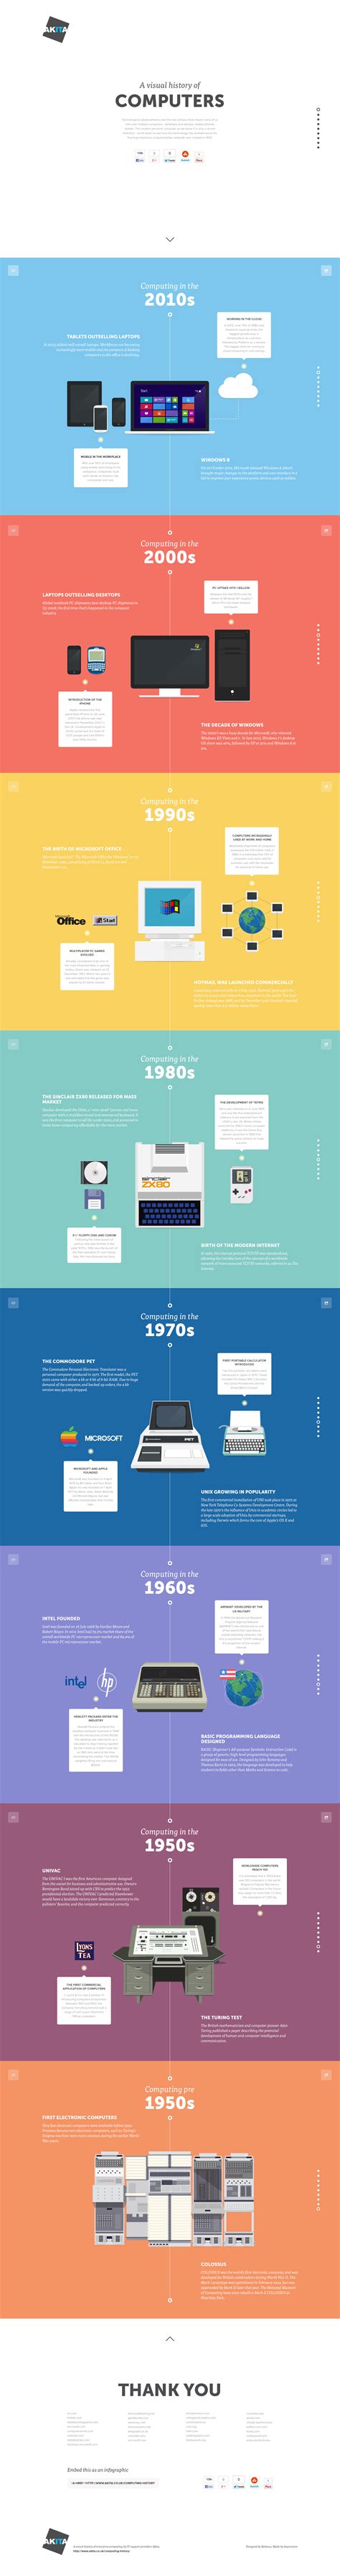 A Visual History of Computers